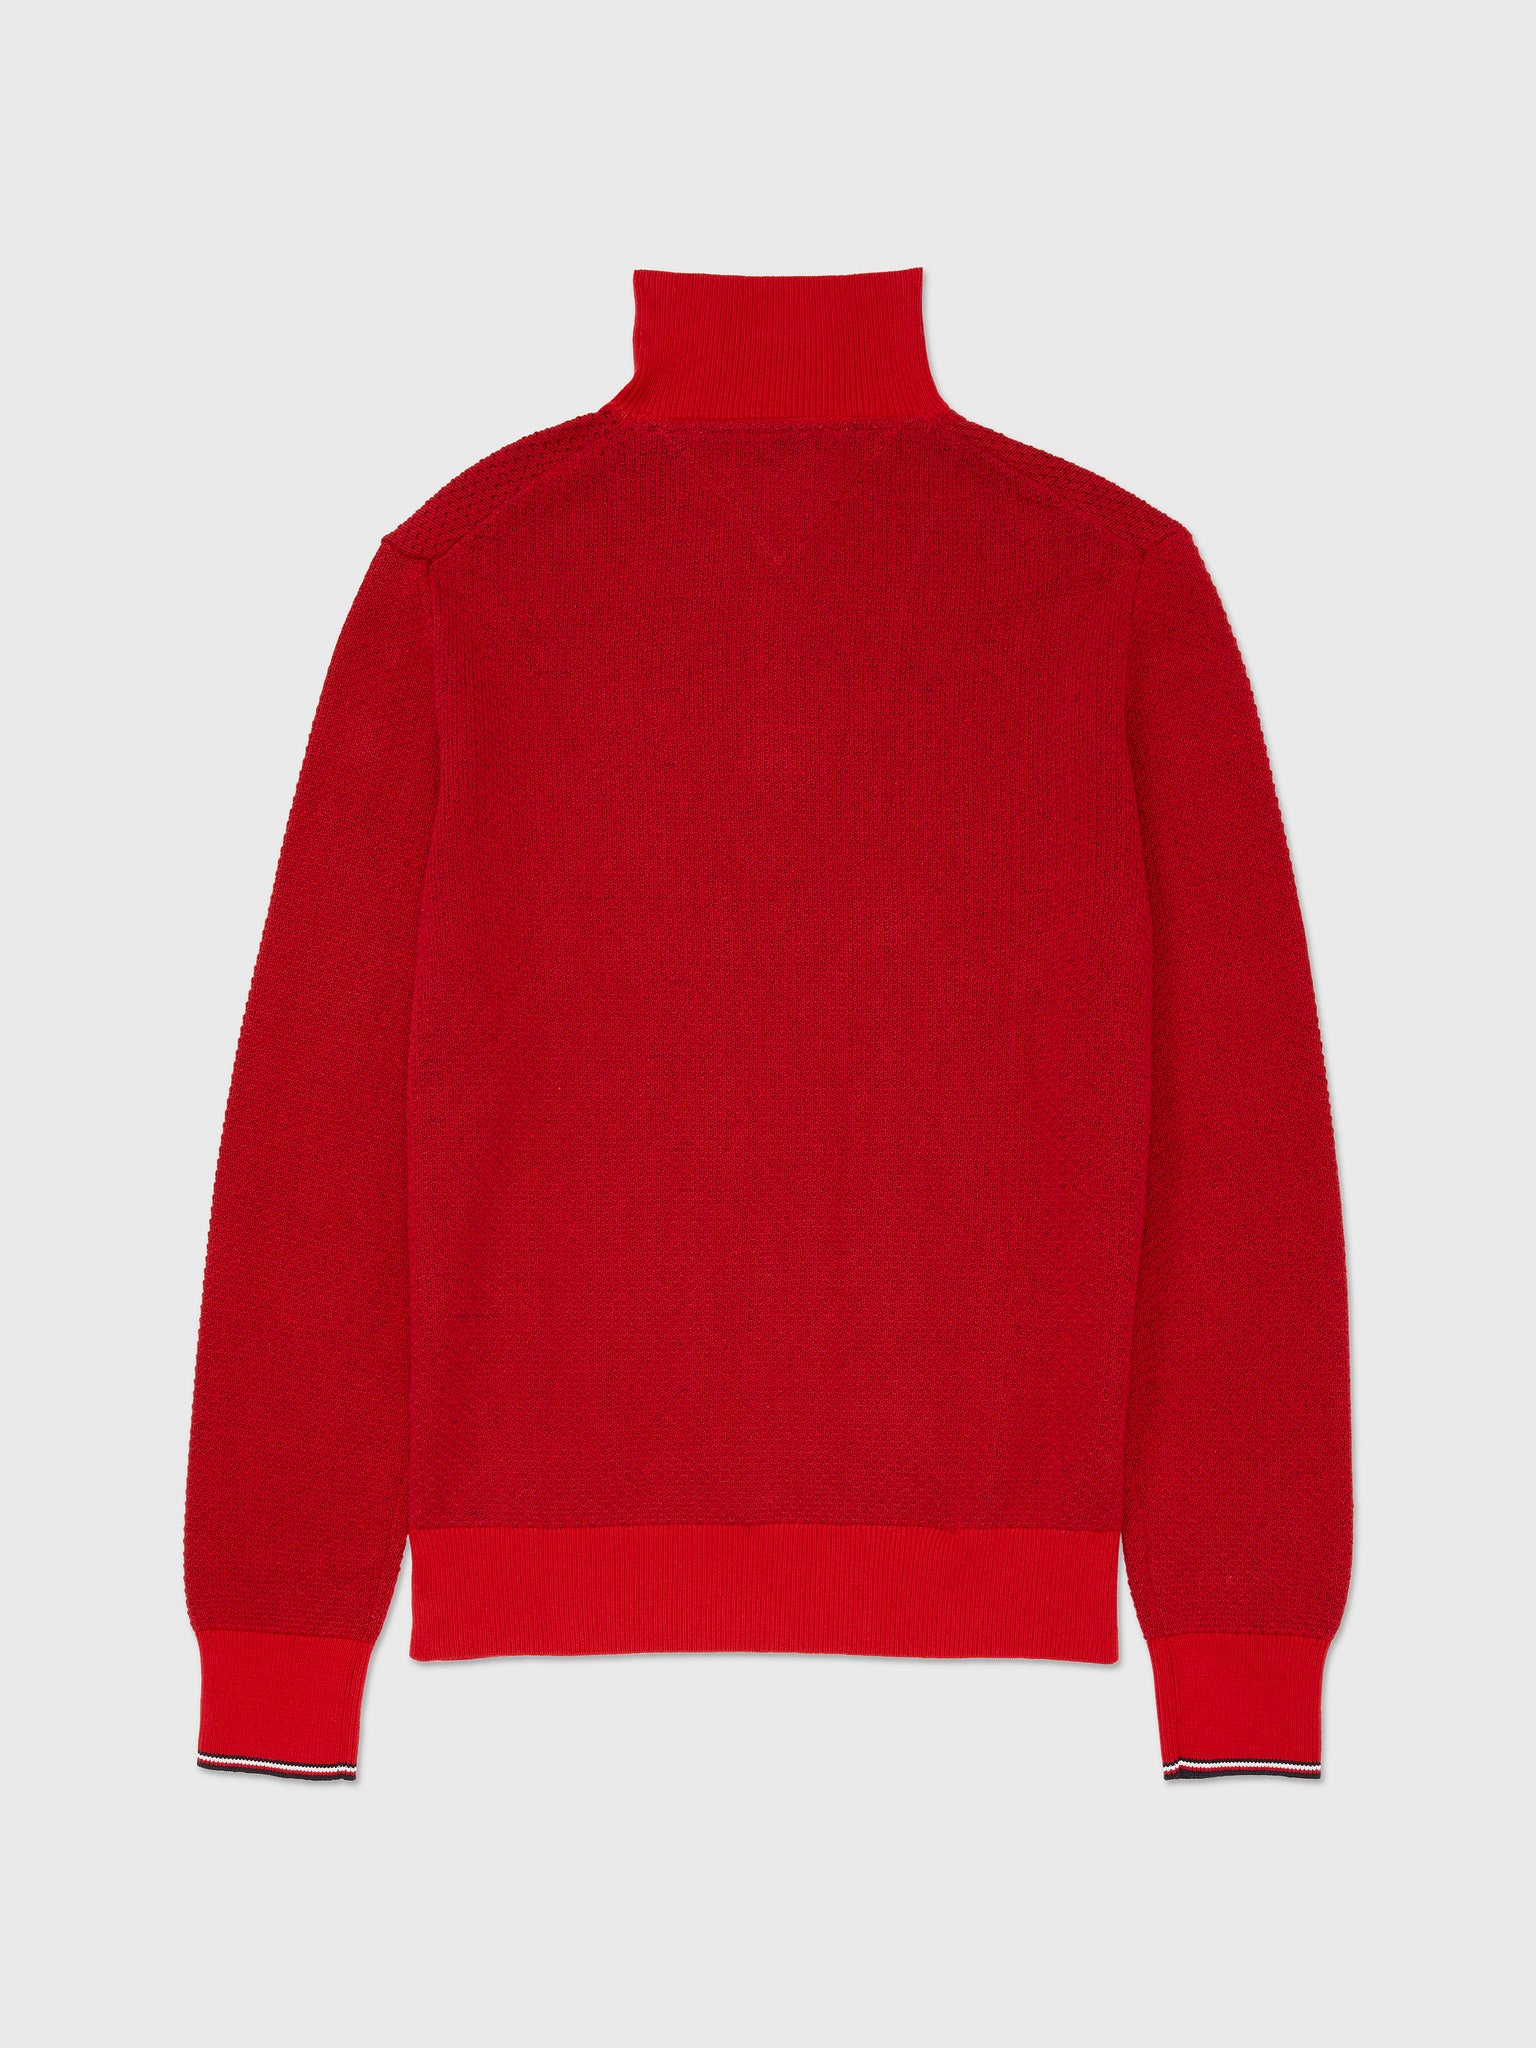 Manhanttan Quarter Zip Sweater (Mens) - Primary Red